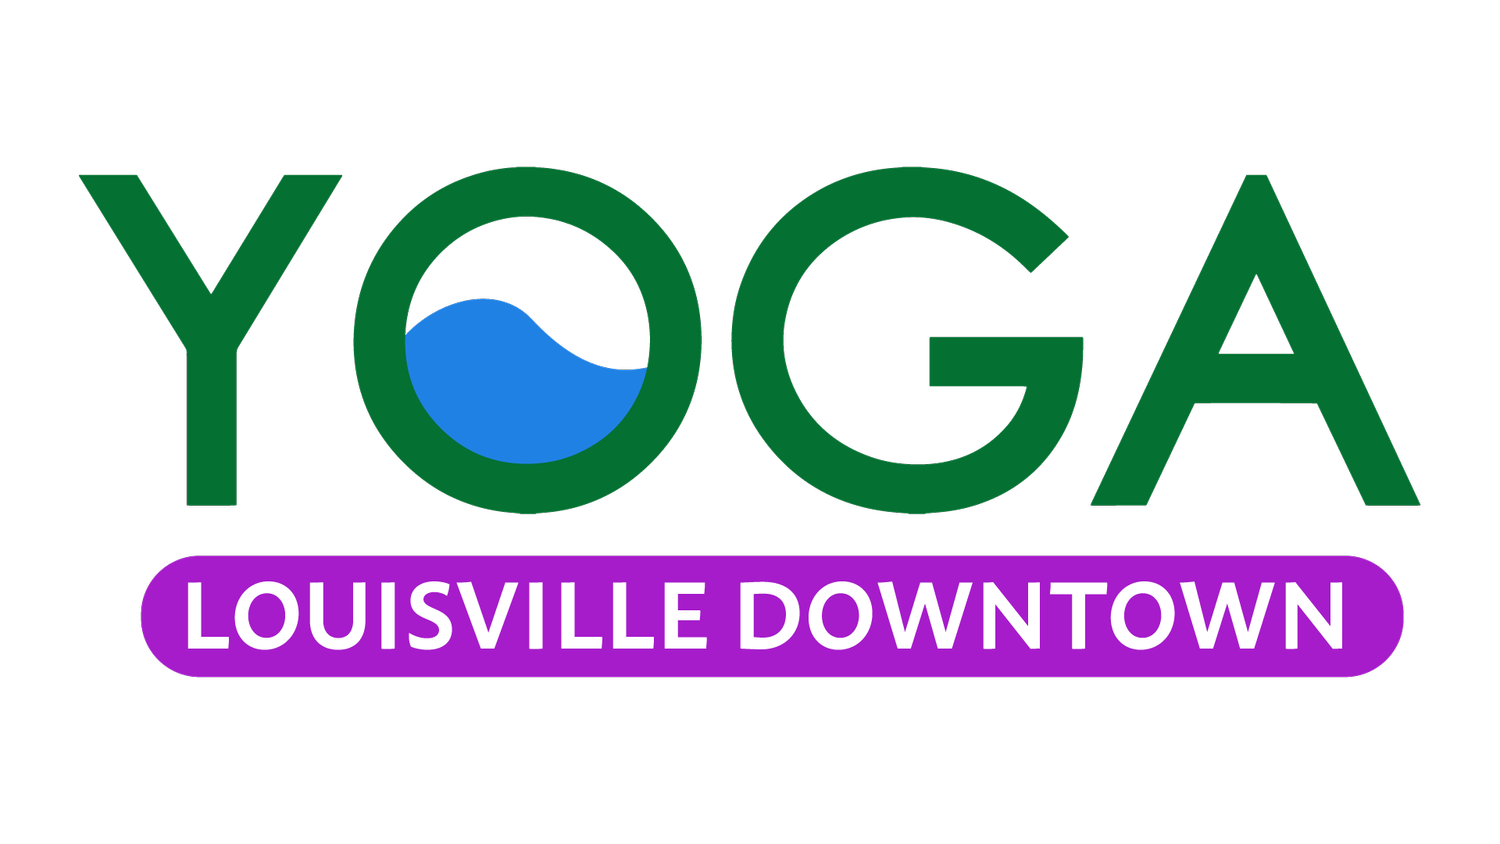   Yoga Louisville Downtown 